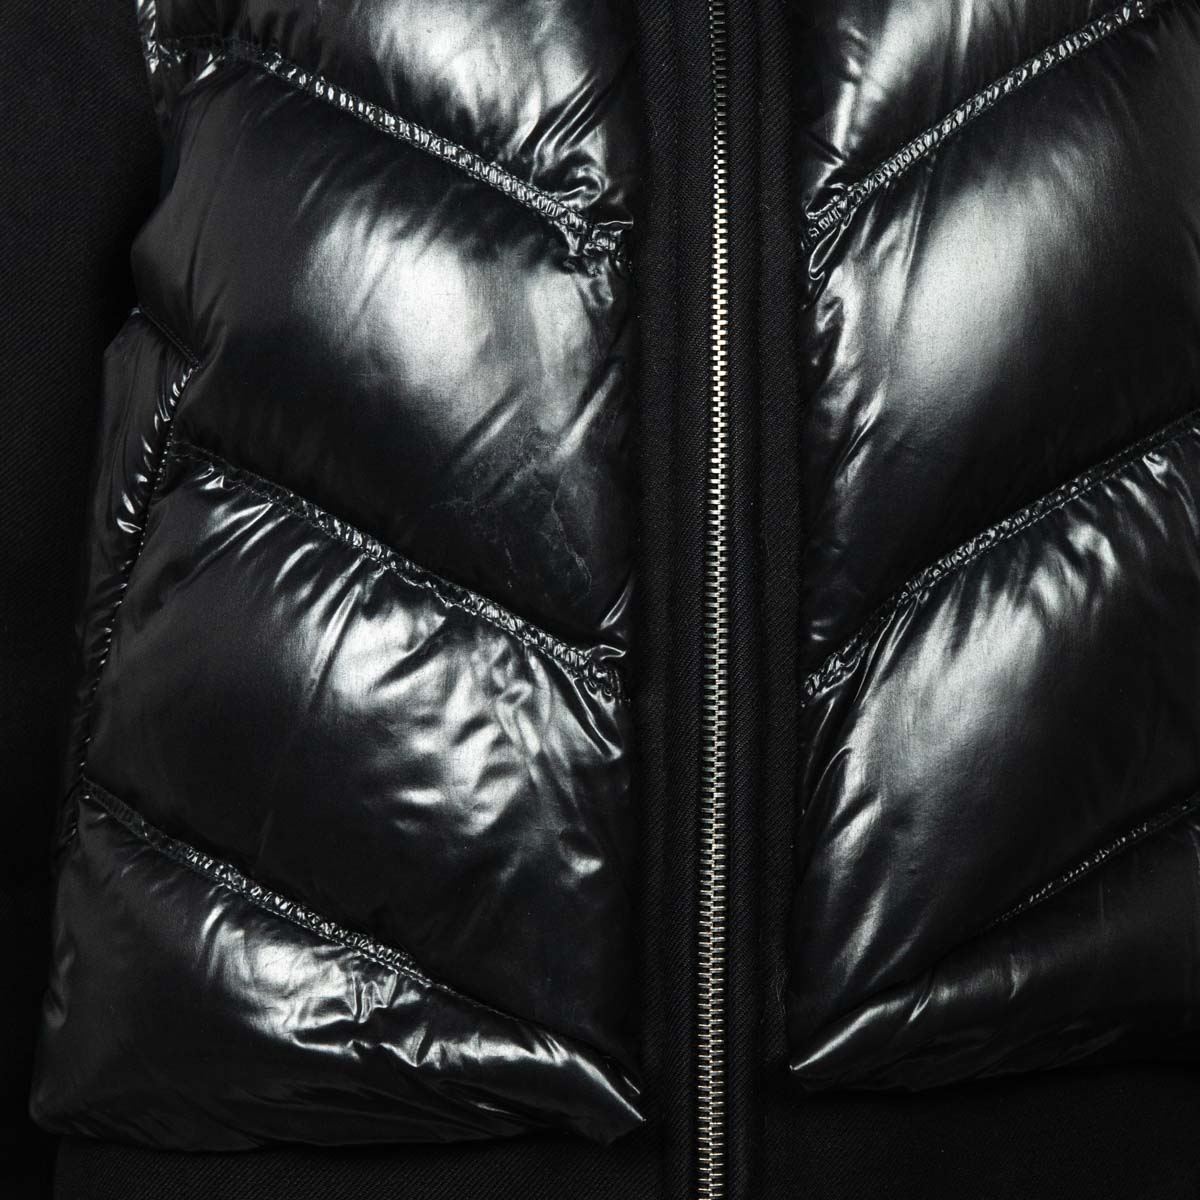 Puffer Louis Vuitton Black size L International in Polyester - 30979998